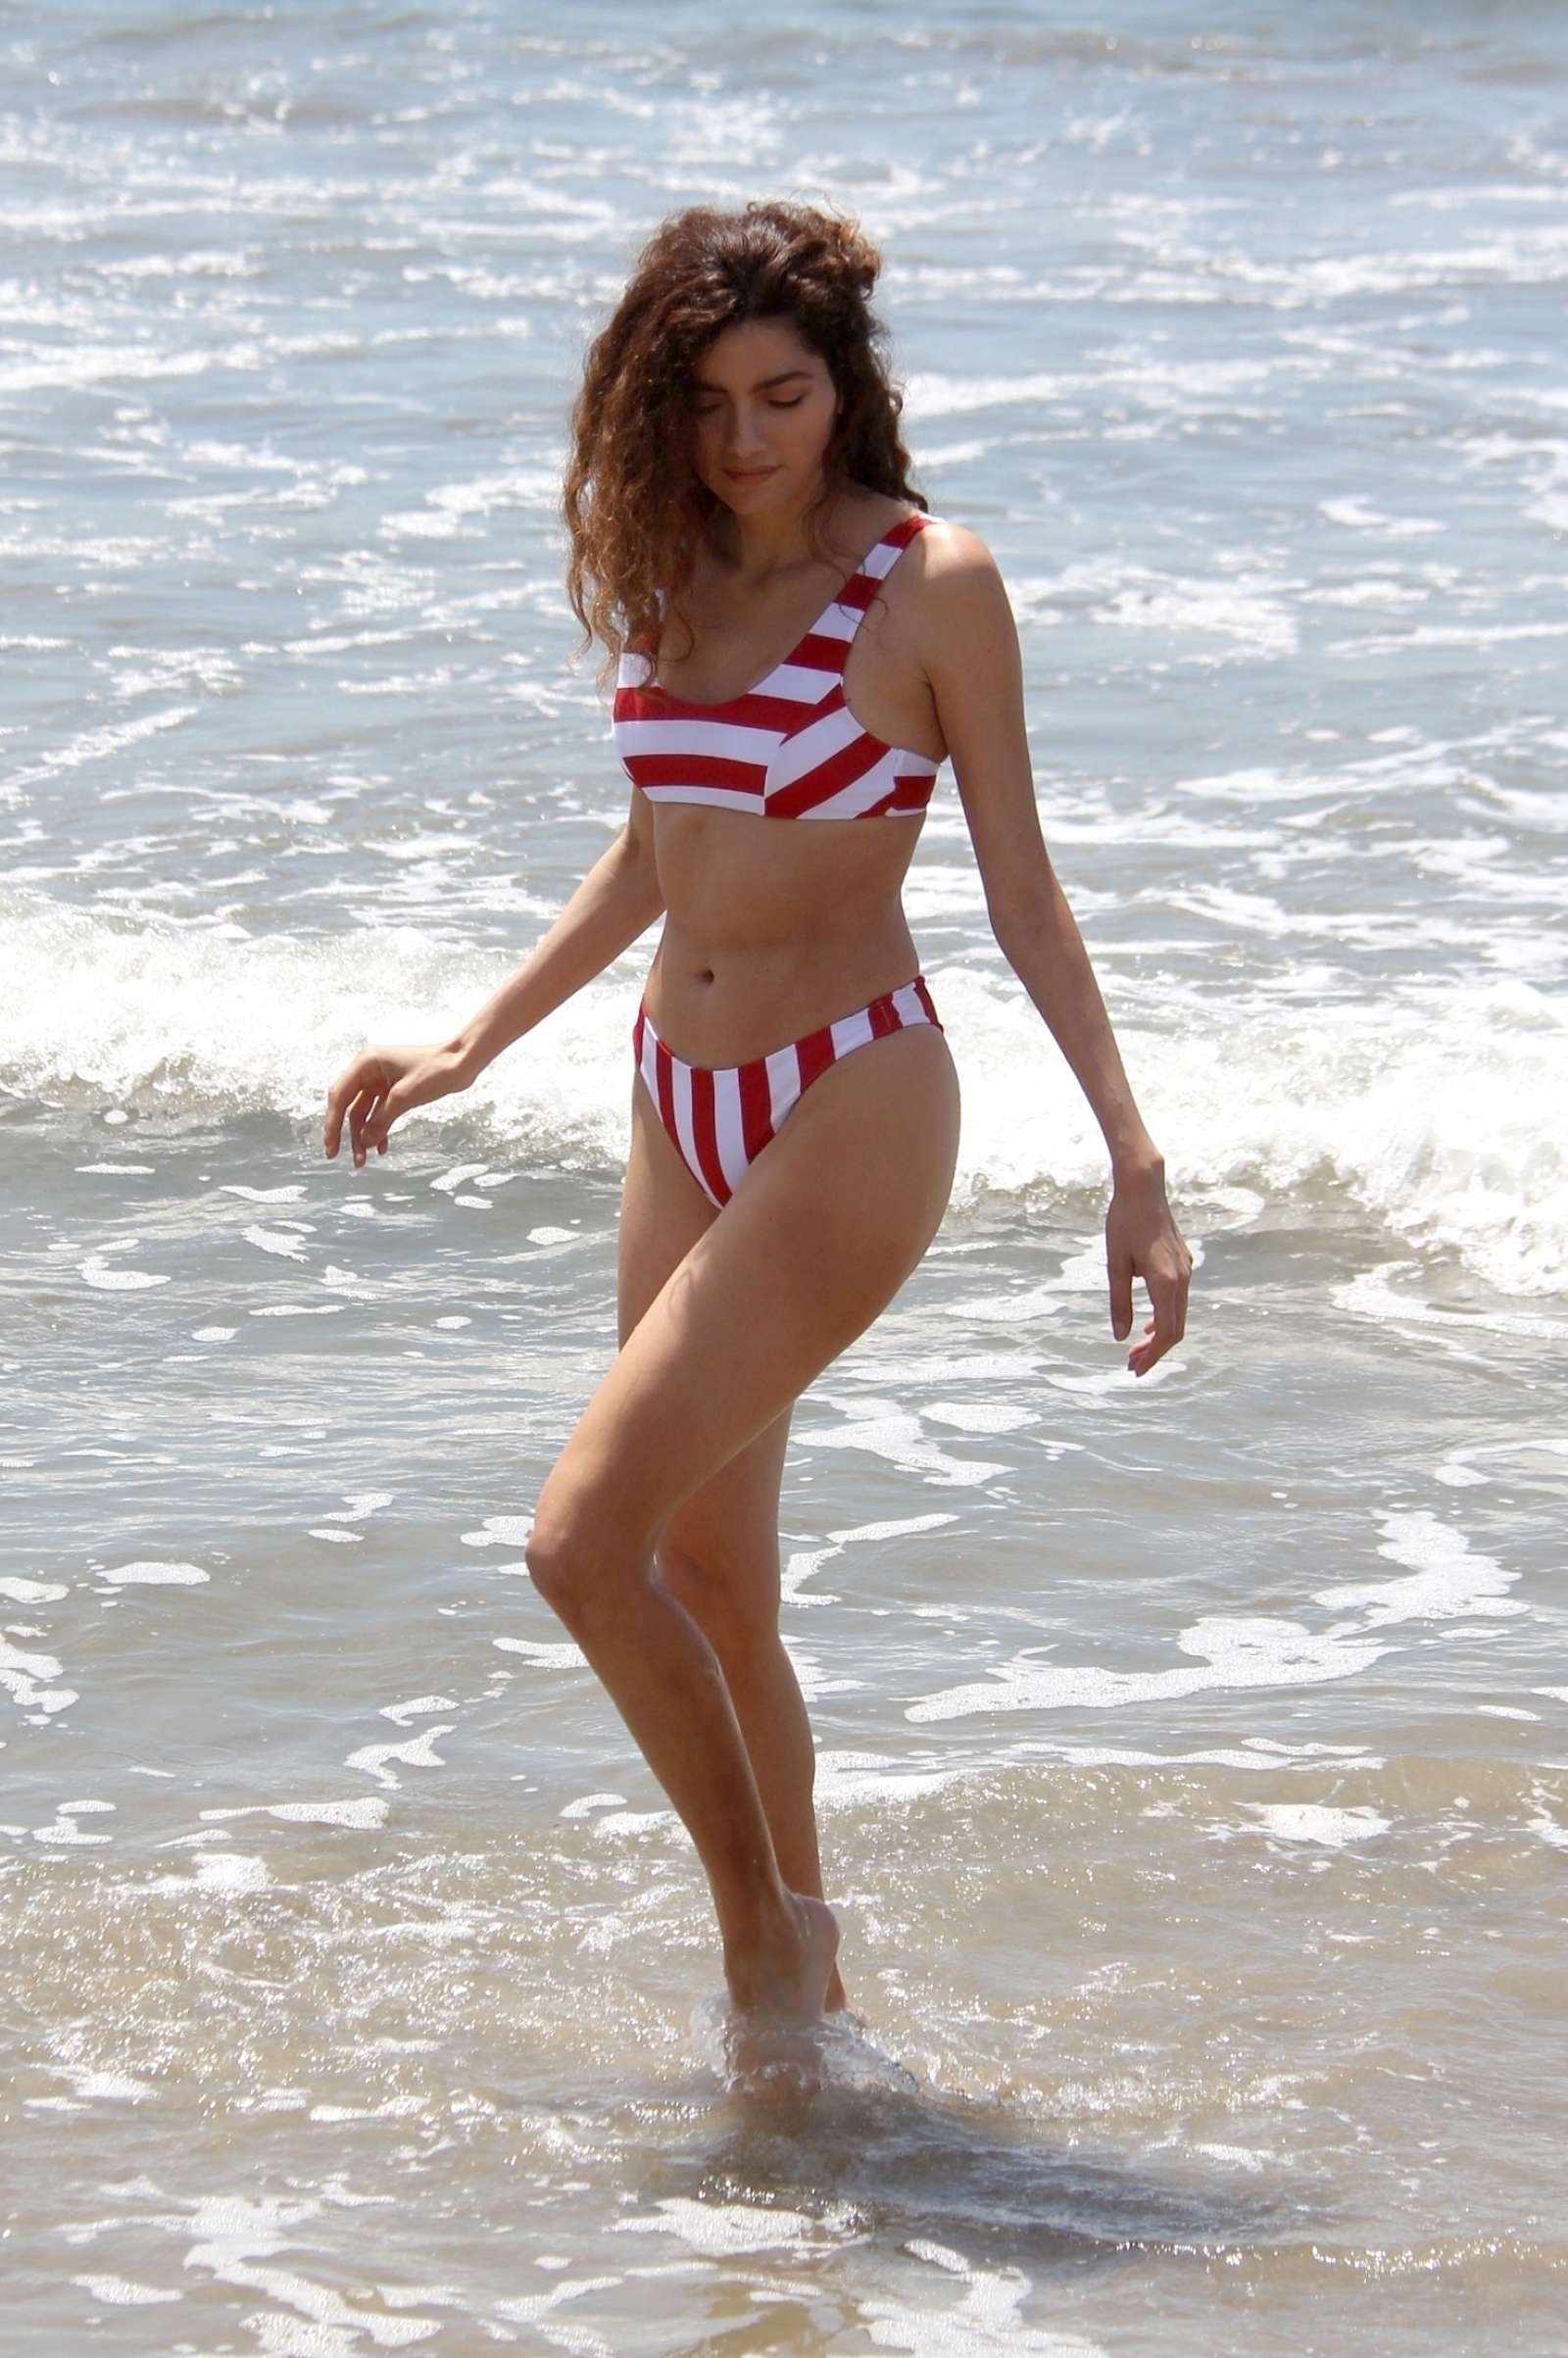 Blanca Blanco in Red and White Bikini at the beach in Malibu